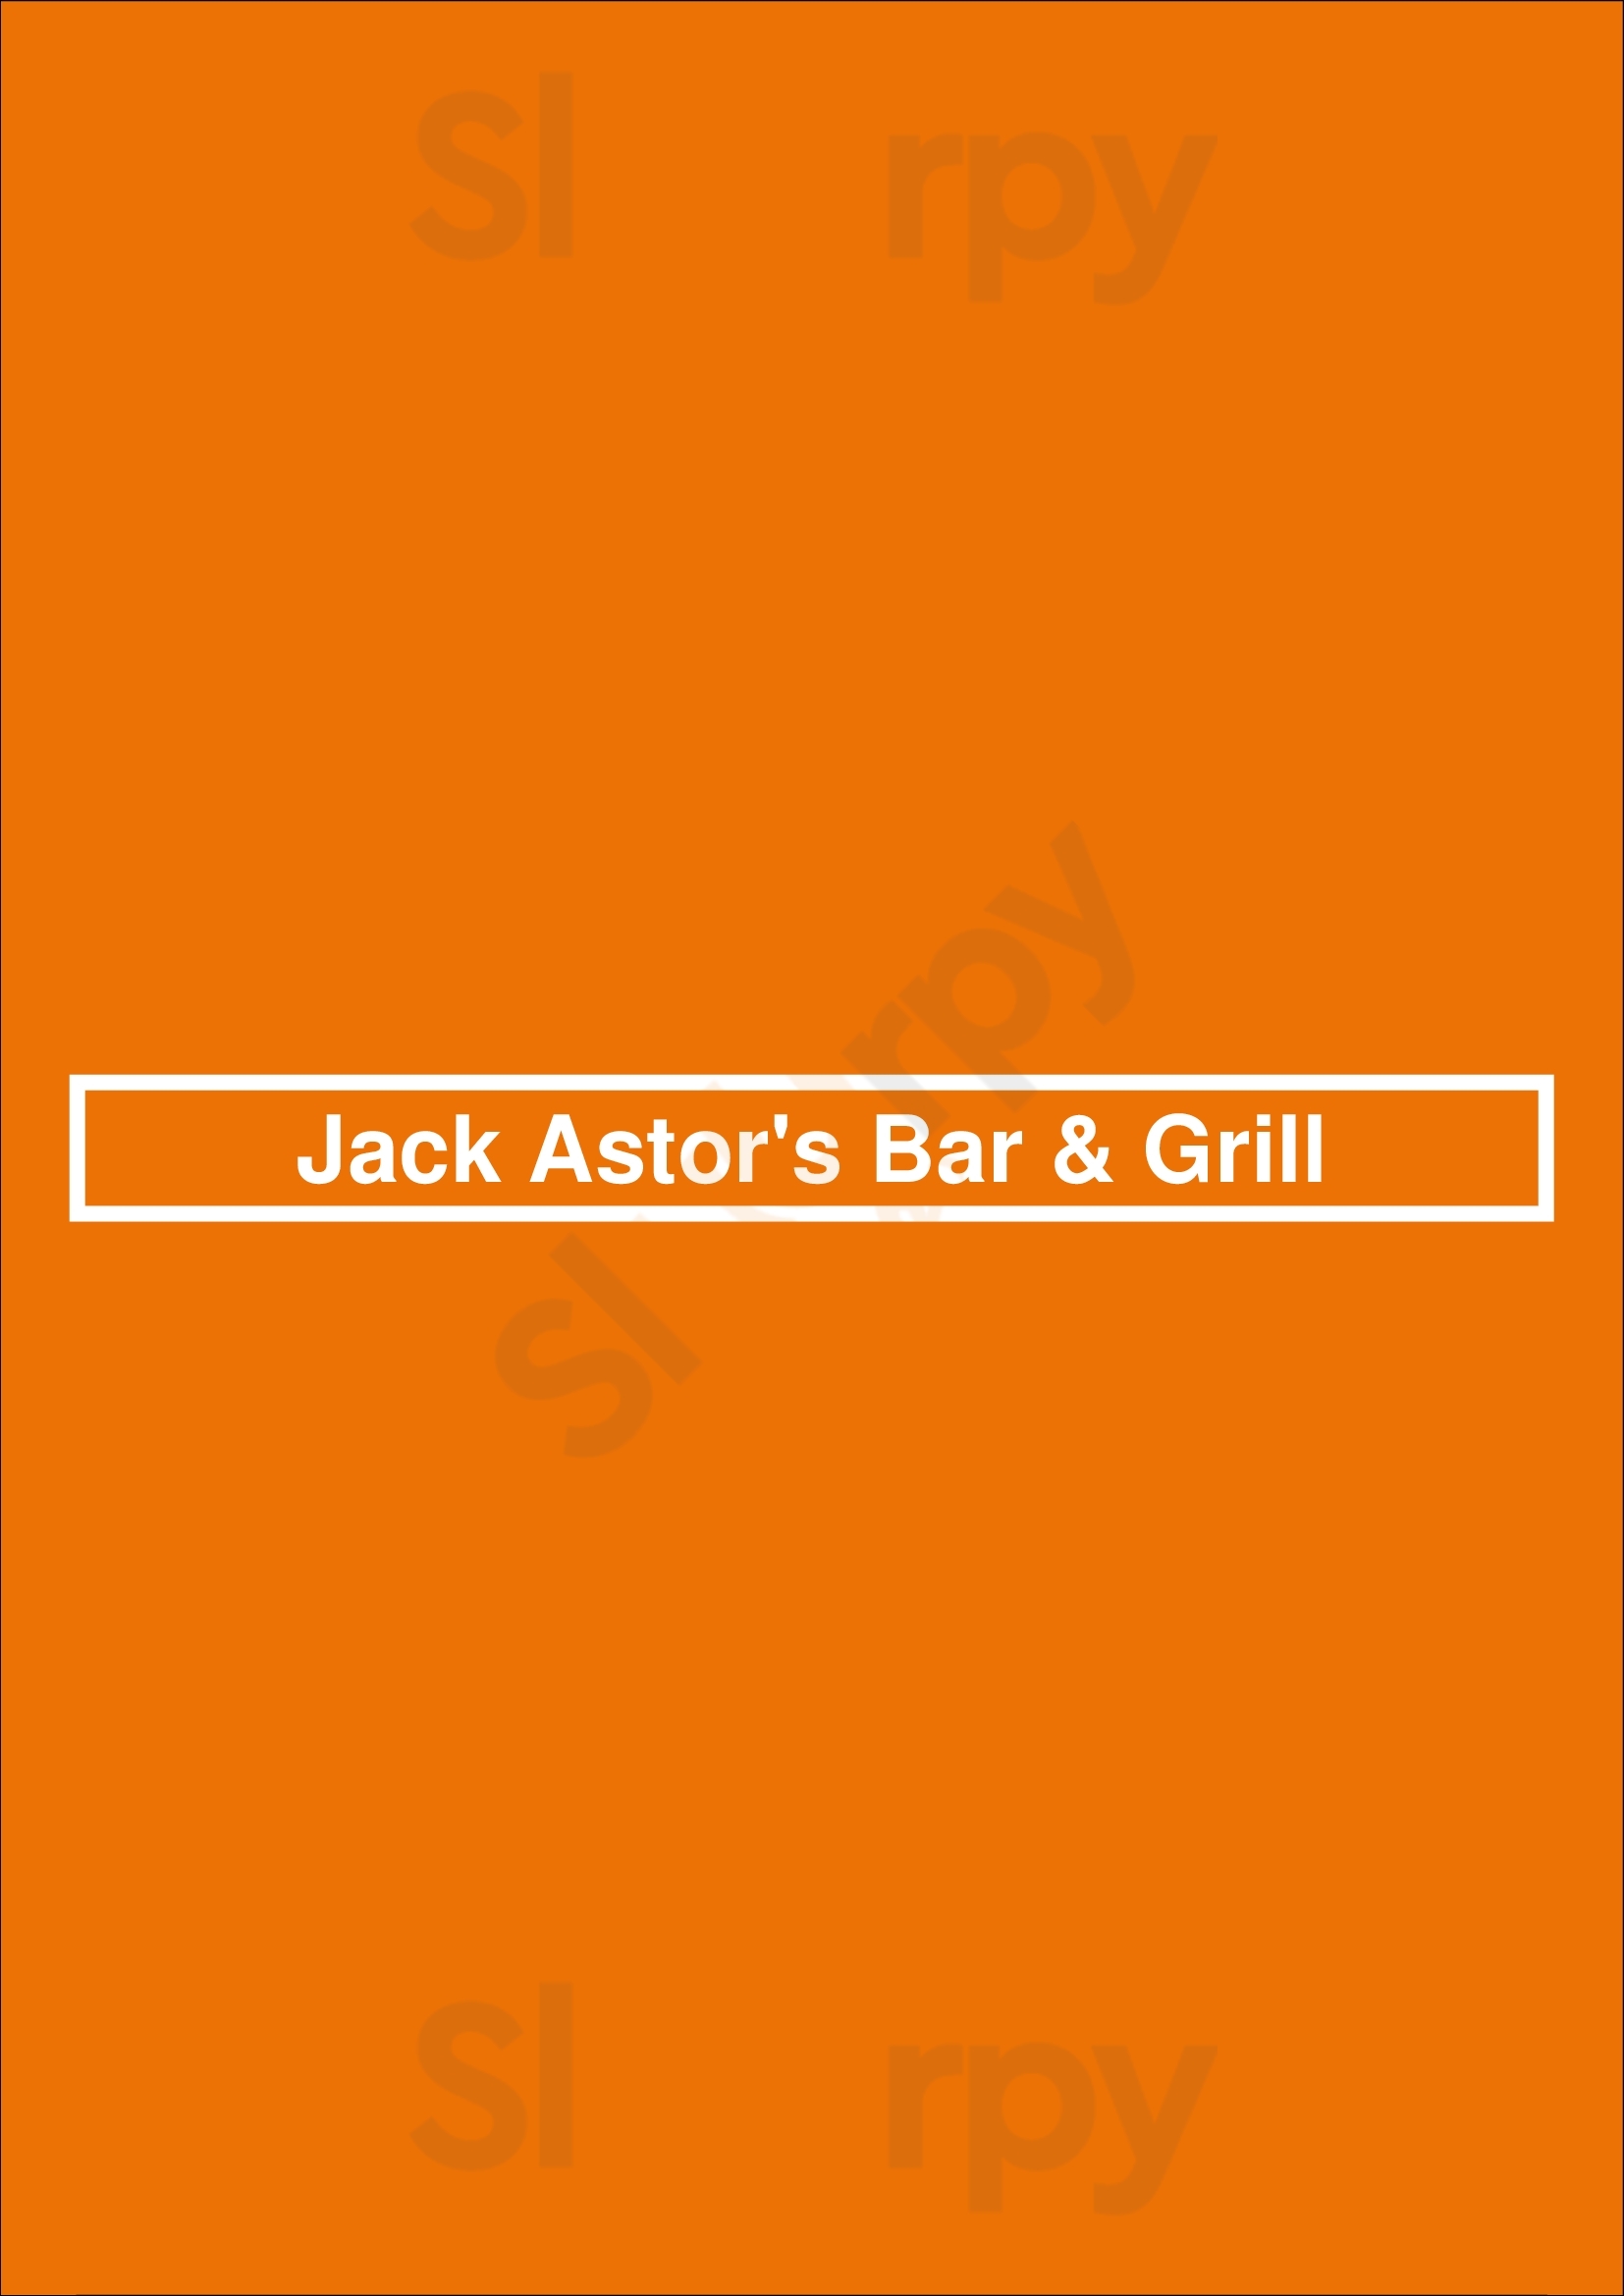 Jack Astor's Bar & Grill Burlington Burlington Menu - 1